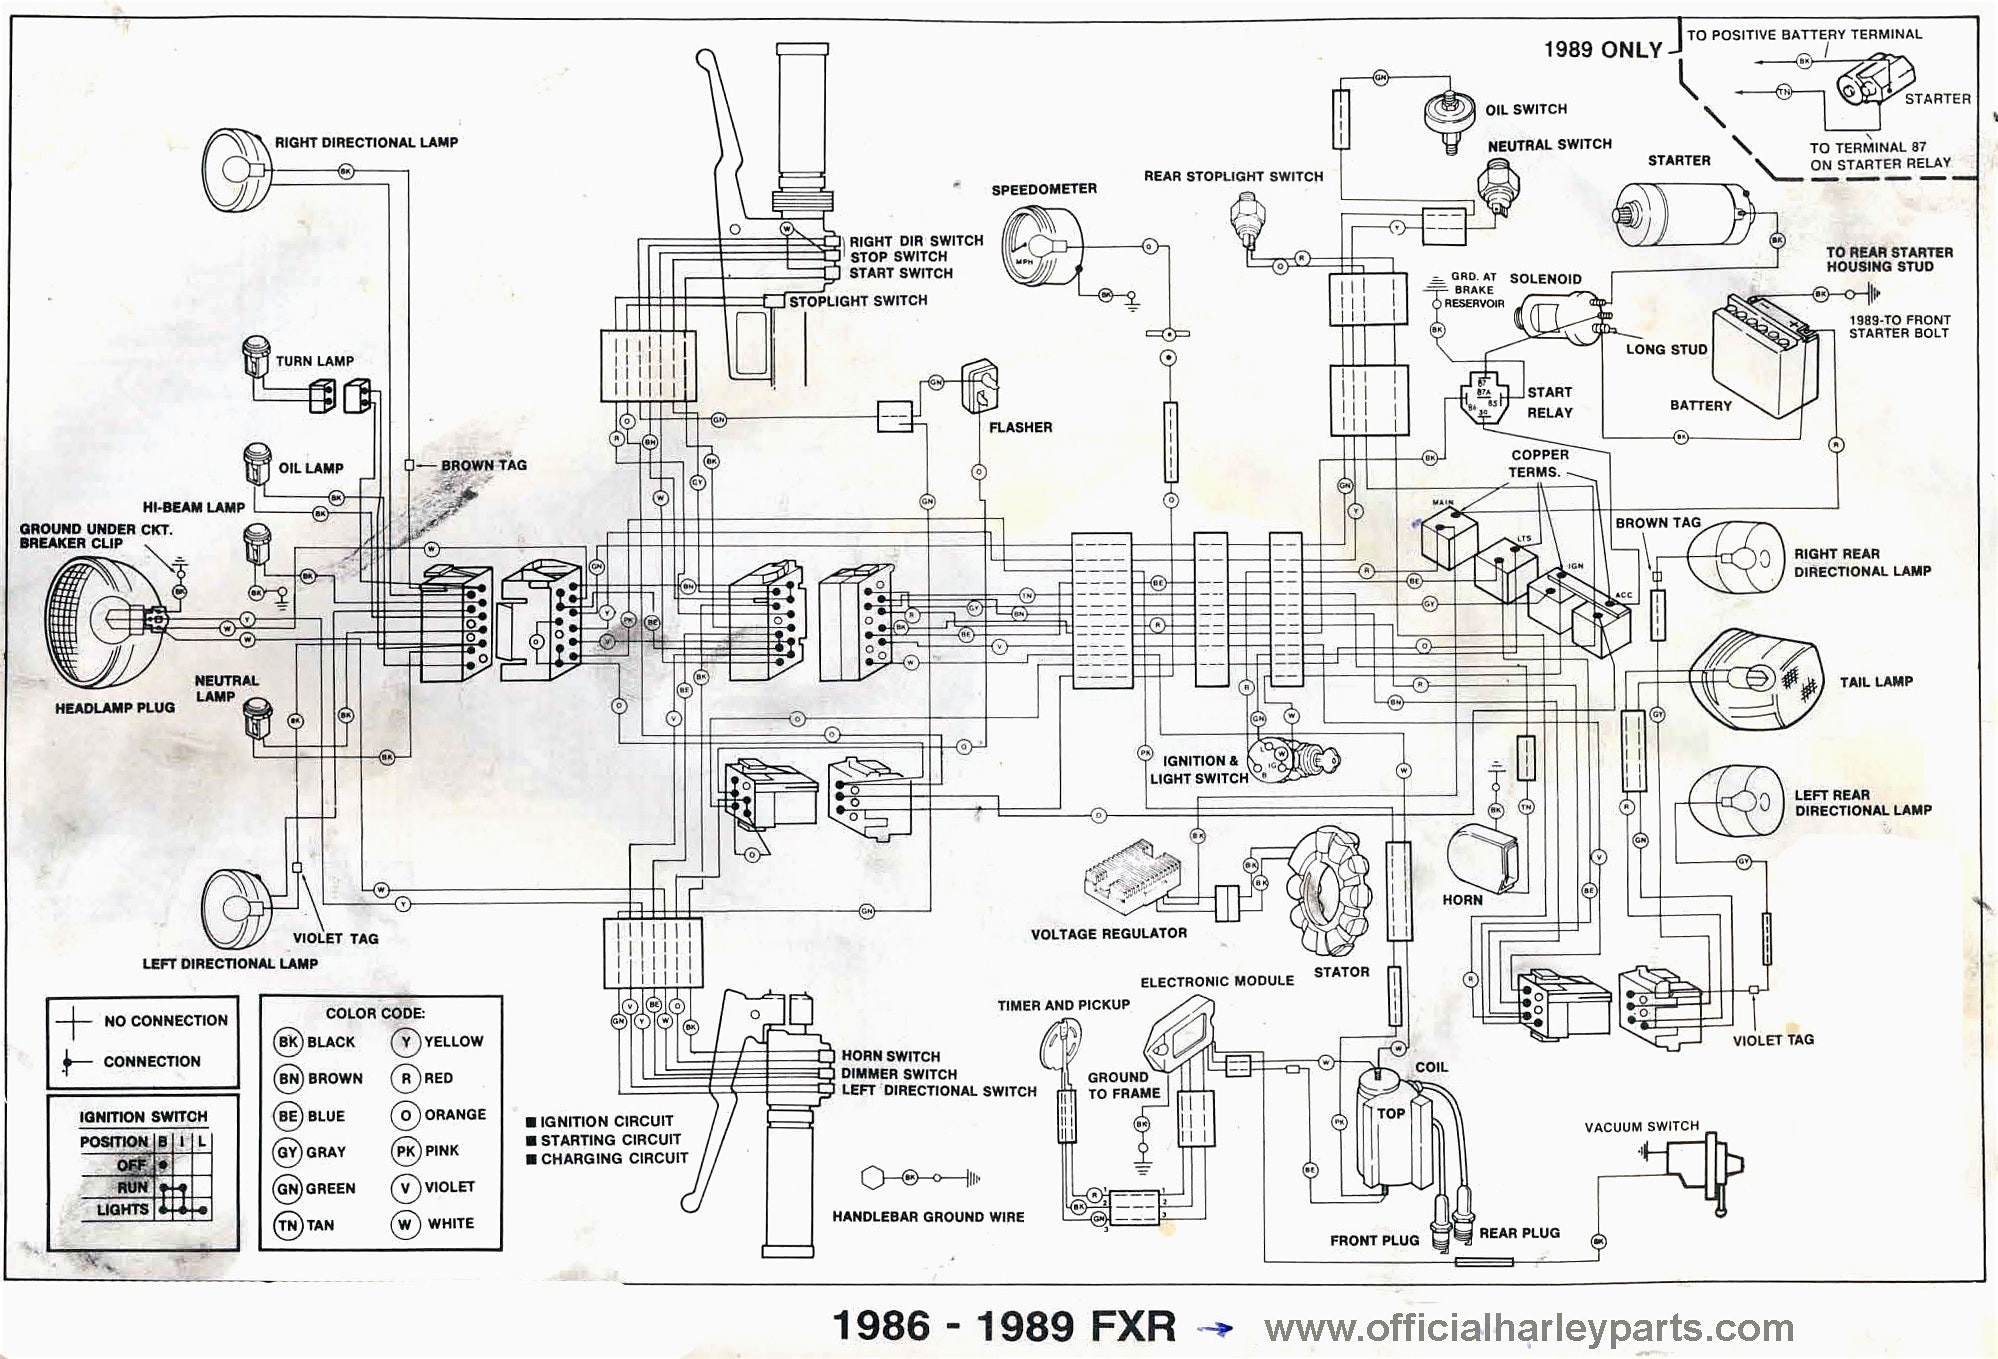 Harley V Twin Engine Diagram 1989 Harley Davidson Wiring Diagram Wiring Data Of Harley V Twin Engine Diagram